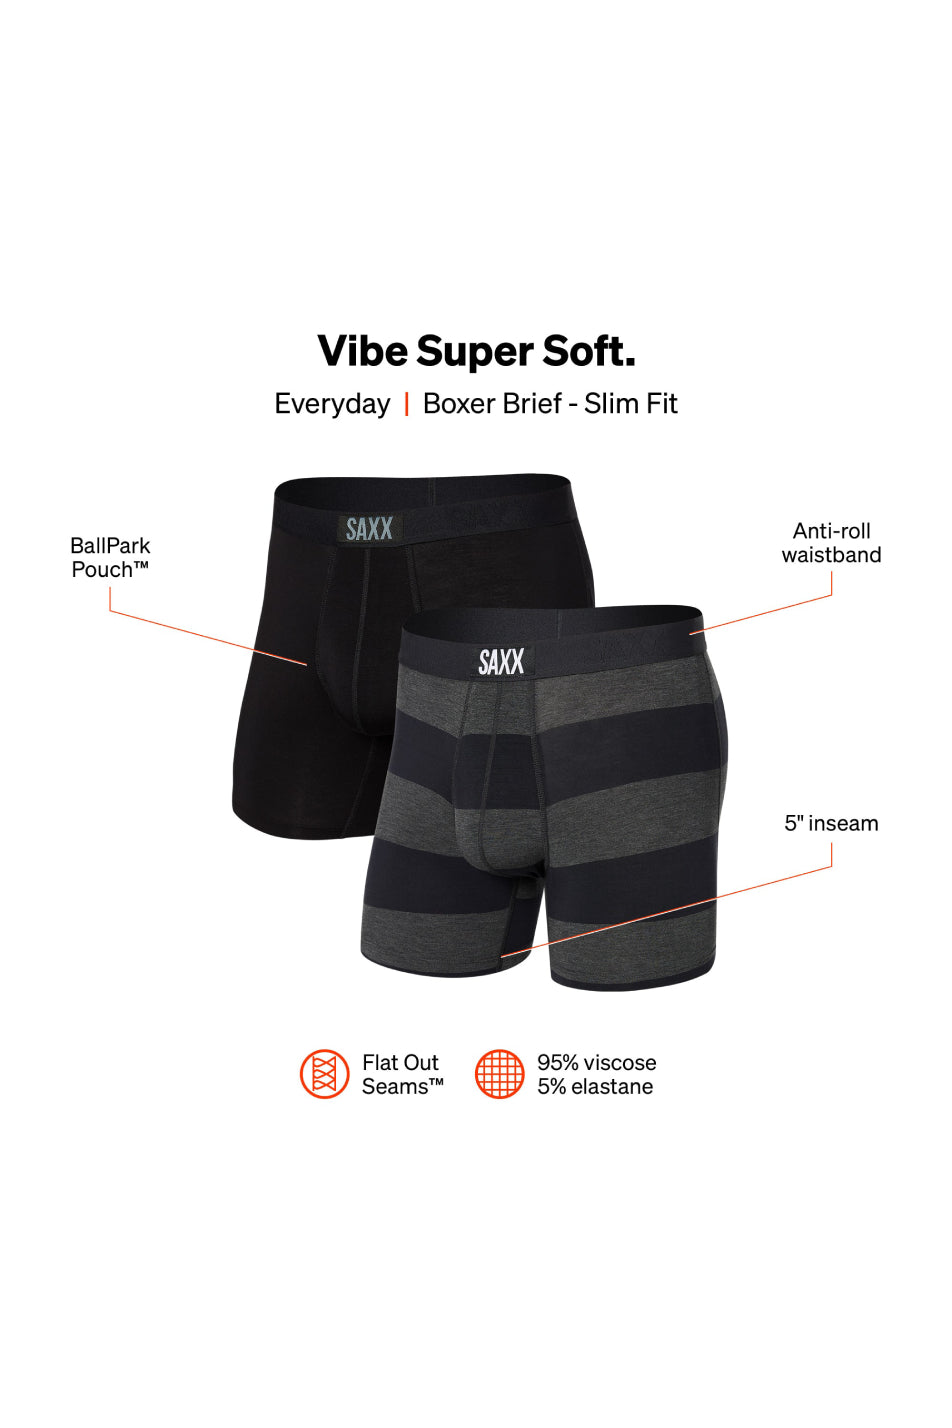 SAXX 2 Pack Men's Vibe Super Soft Boxer Brief